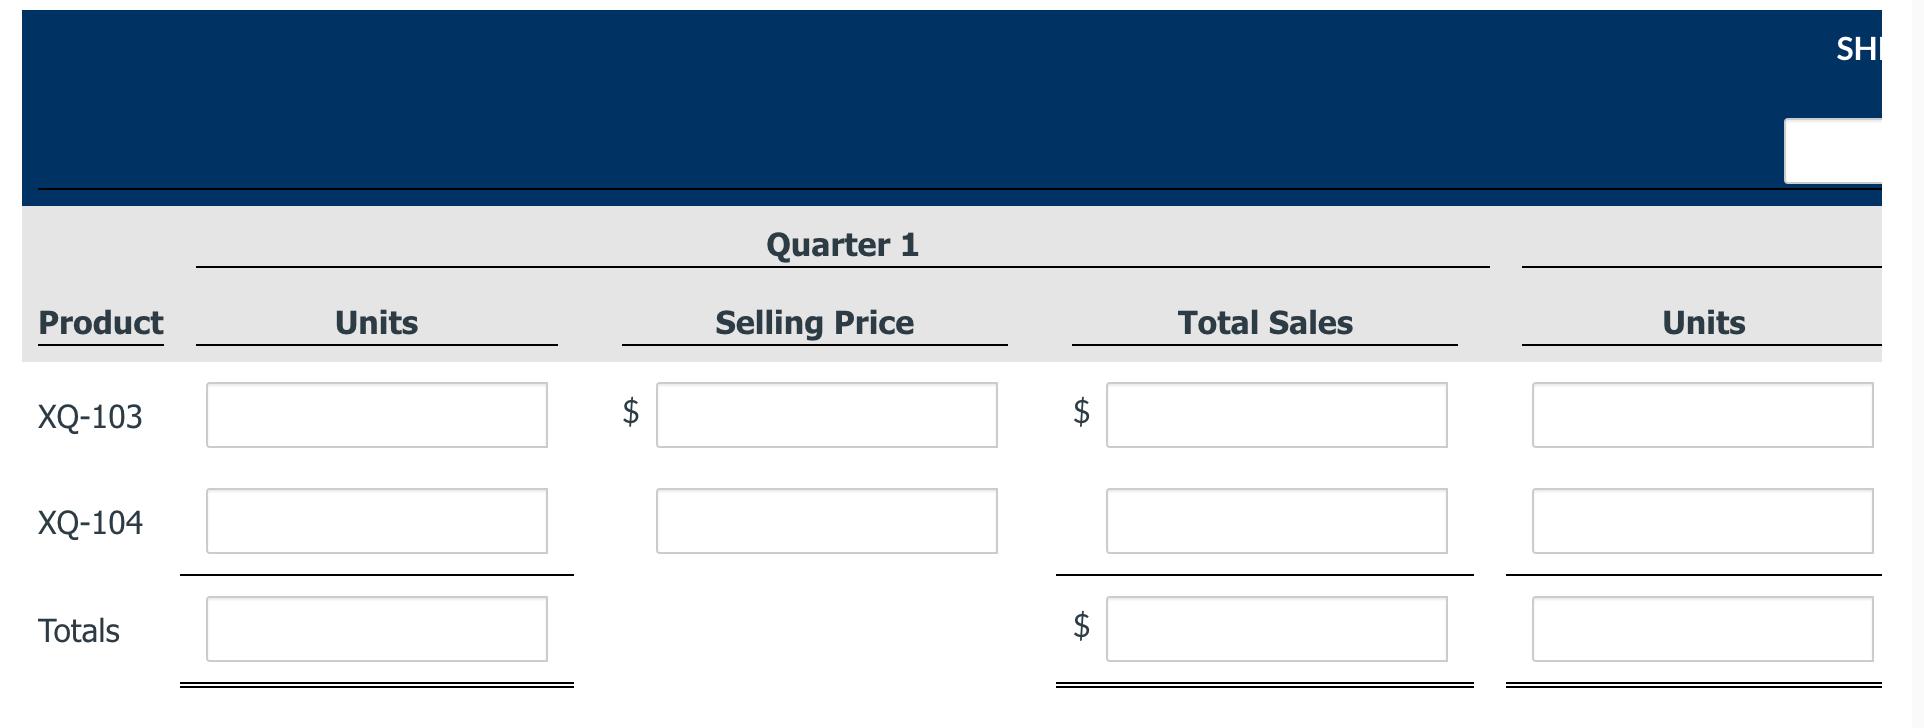 SHIQuarter 1ProductUnitsSelling PriceTotal SalesUnitsXQ-103$$XQ-104Totals$